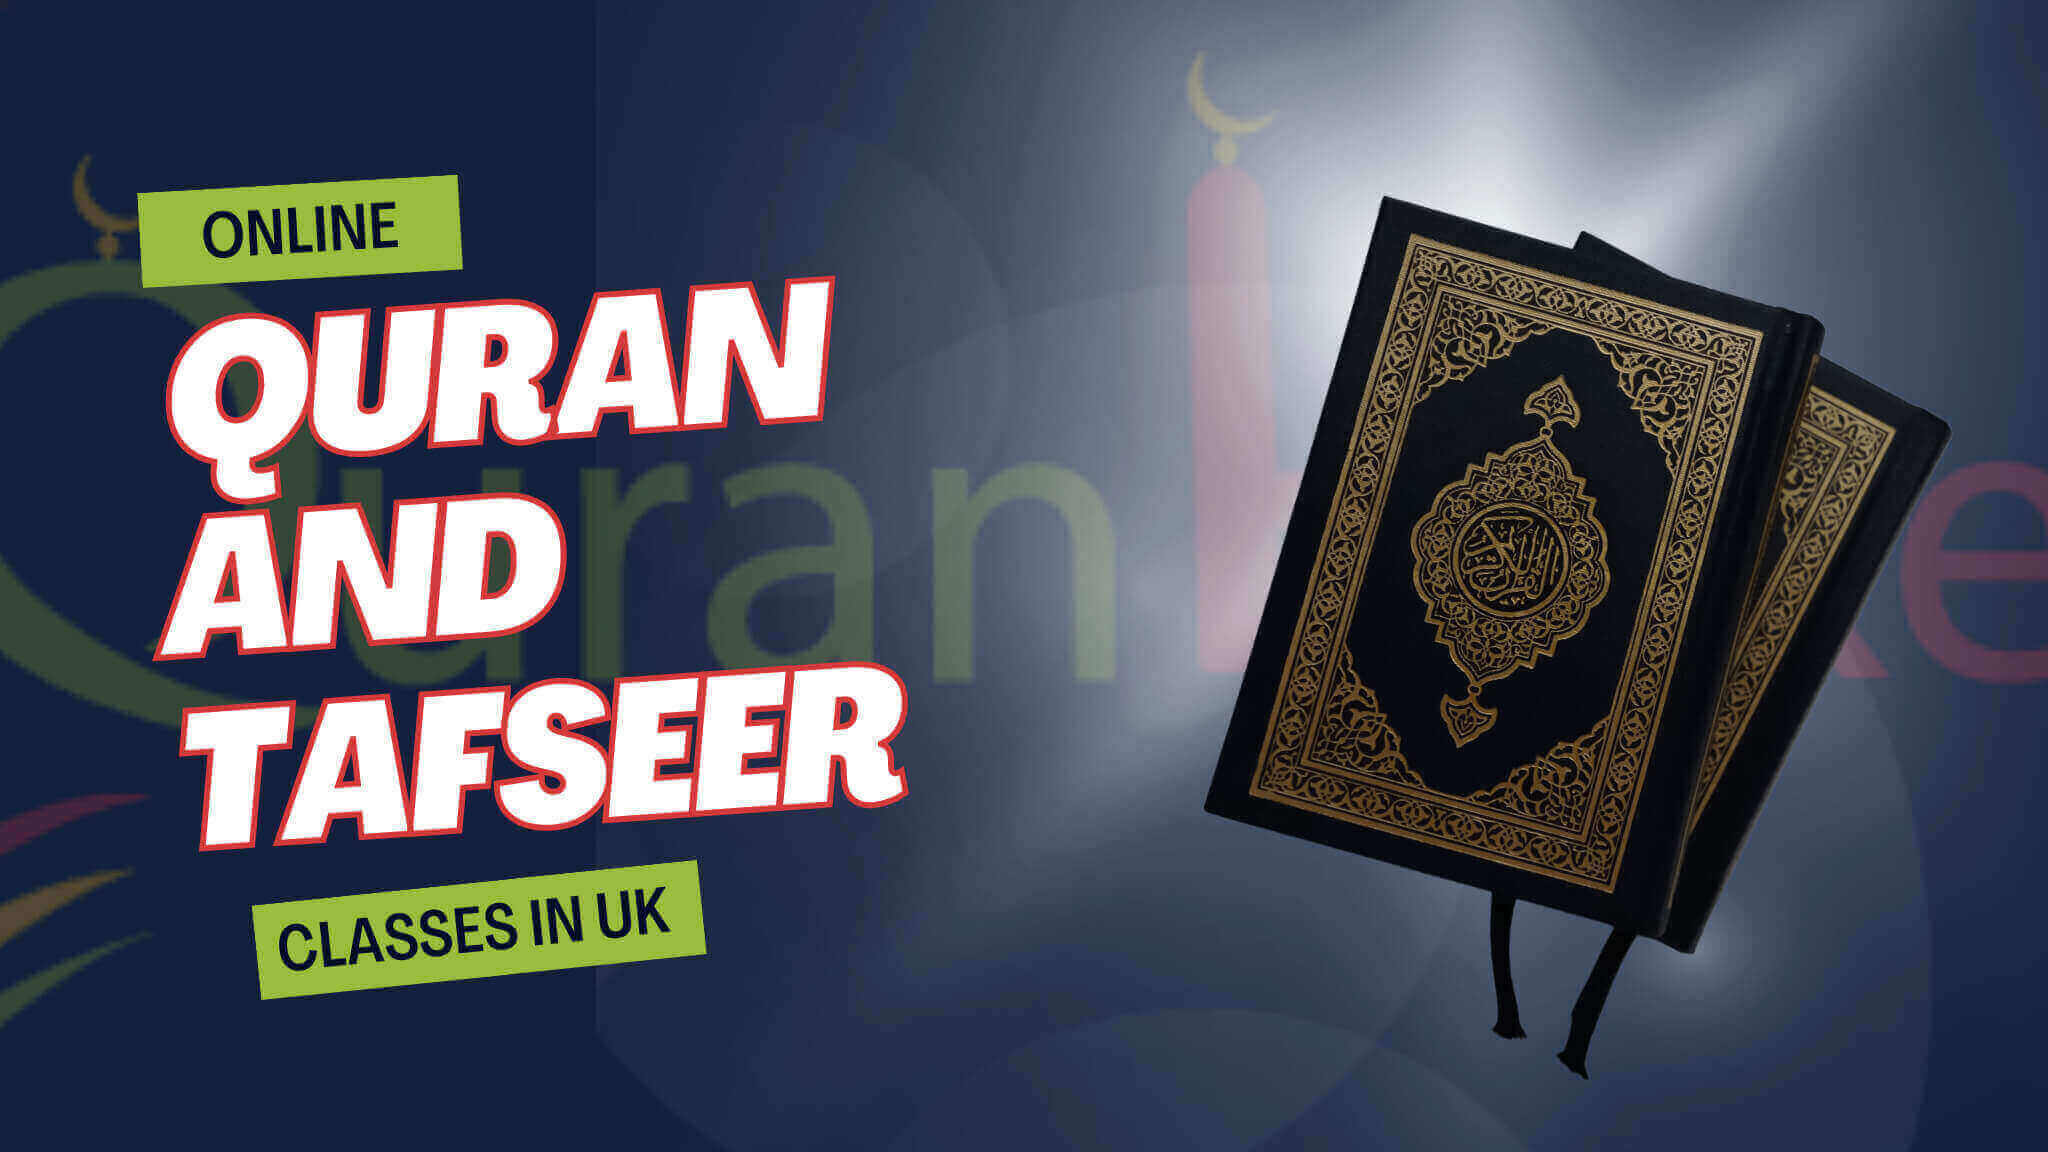 Online quran and tafseer classes in uk